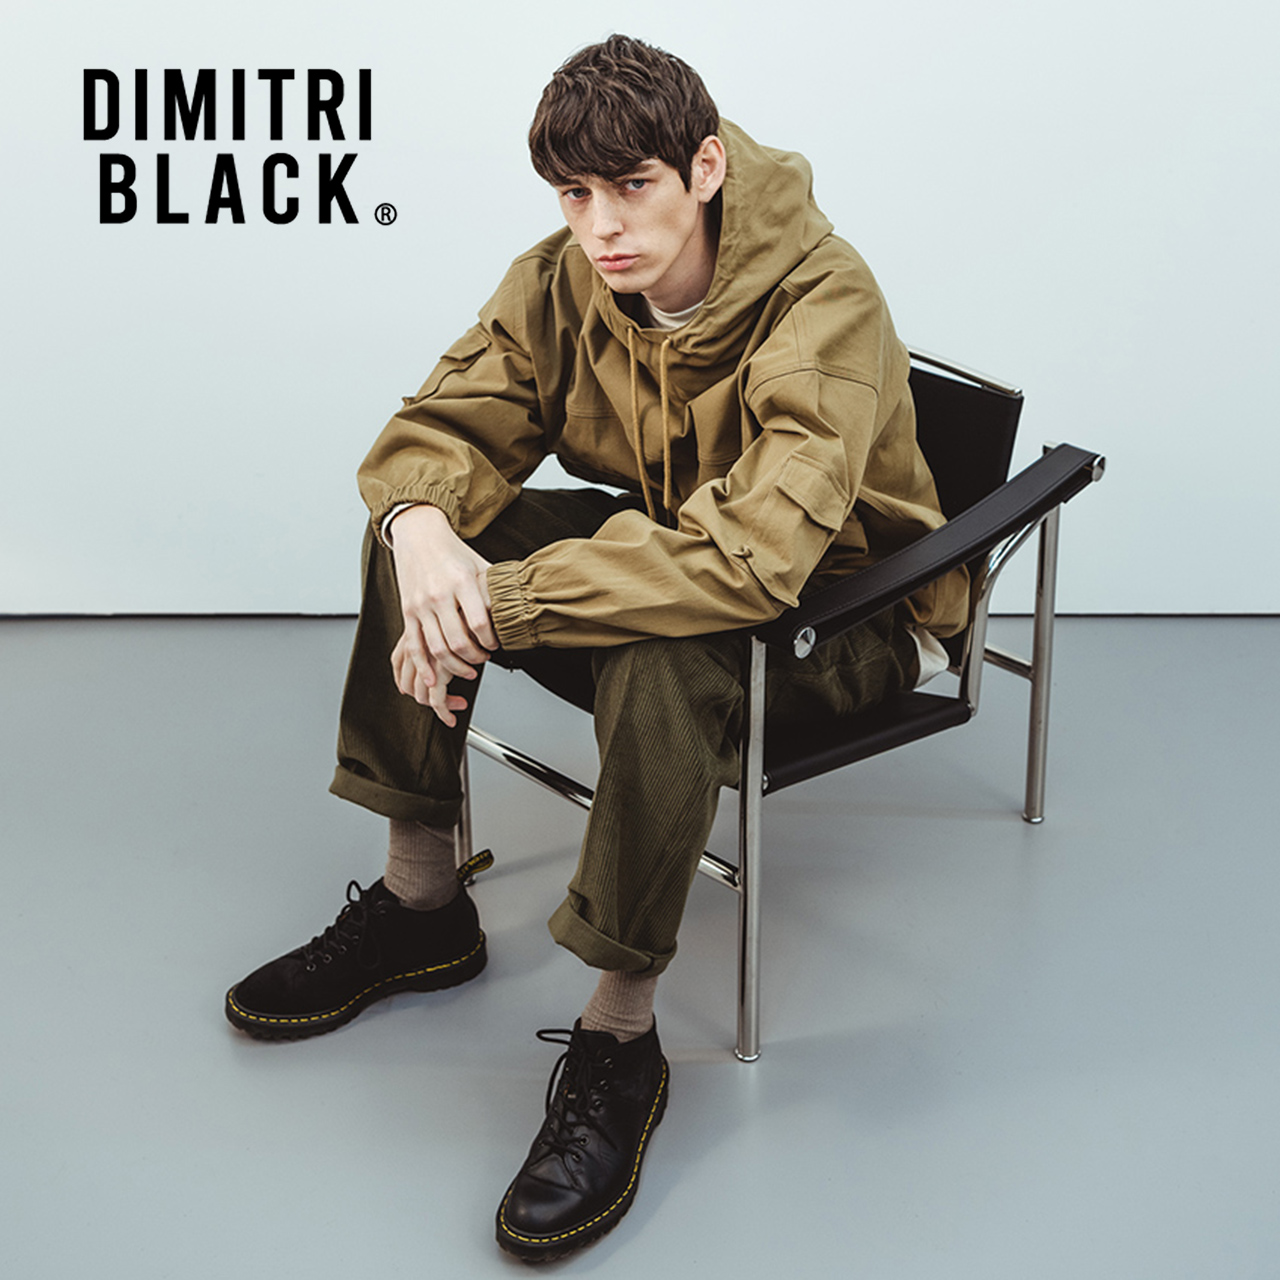 Dimitri Black,服裝,韓國服裝,服裝品牌,韓國品牌,韓國服裝品牌